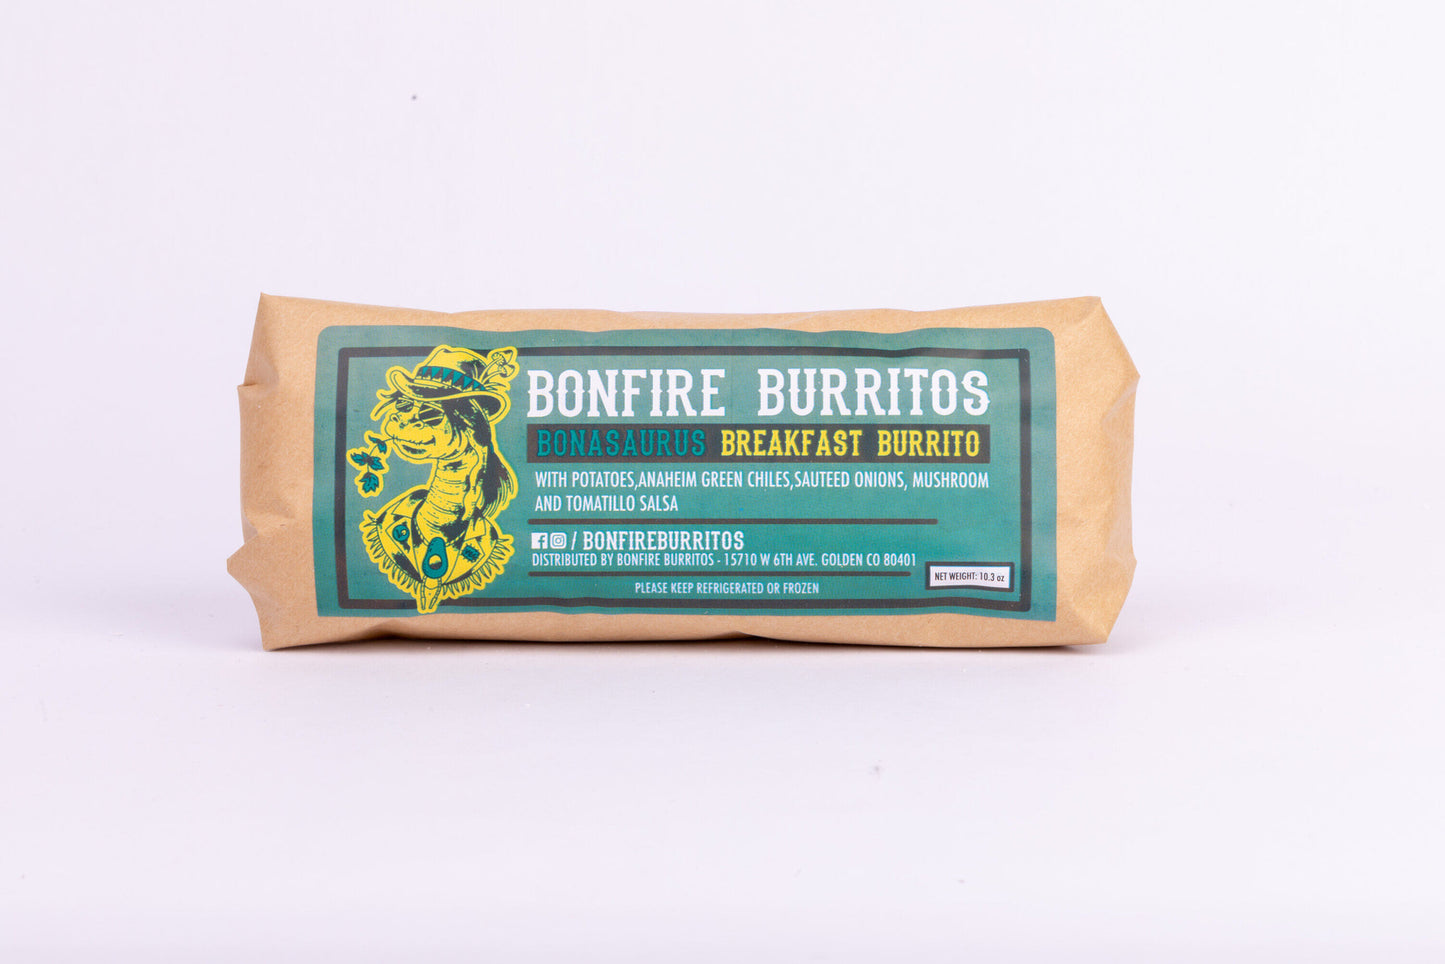 Bonfire Burrito Bonasaurus Vegan (4 pack)